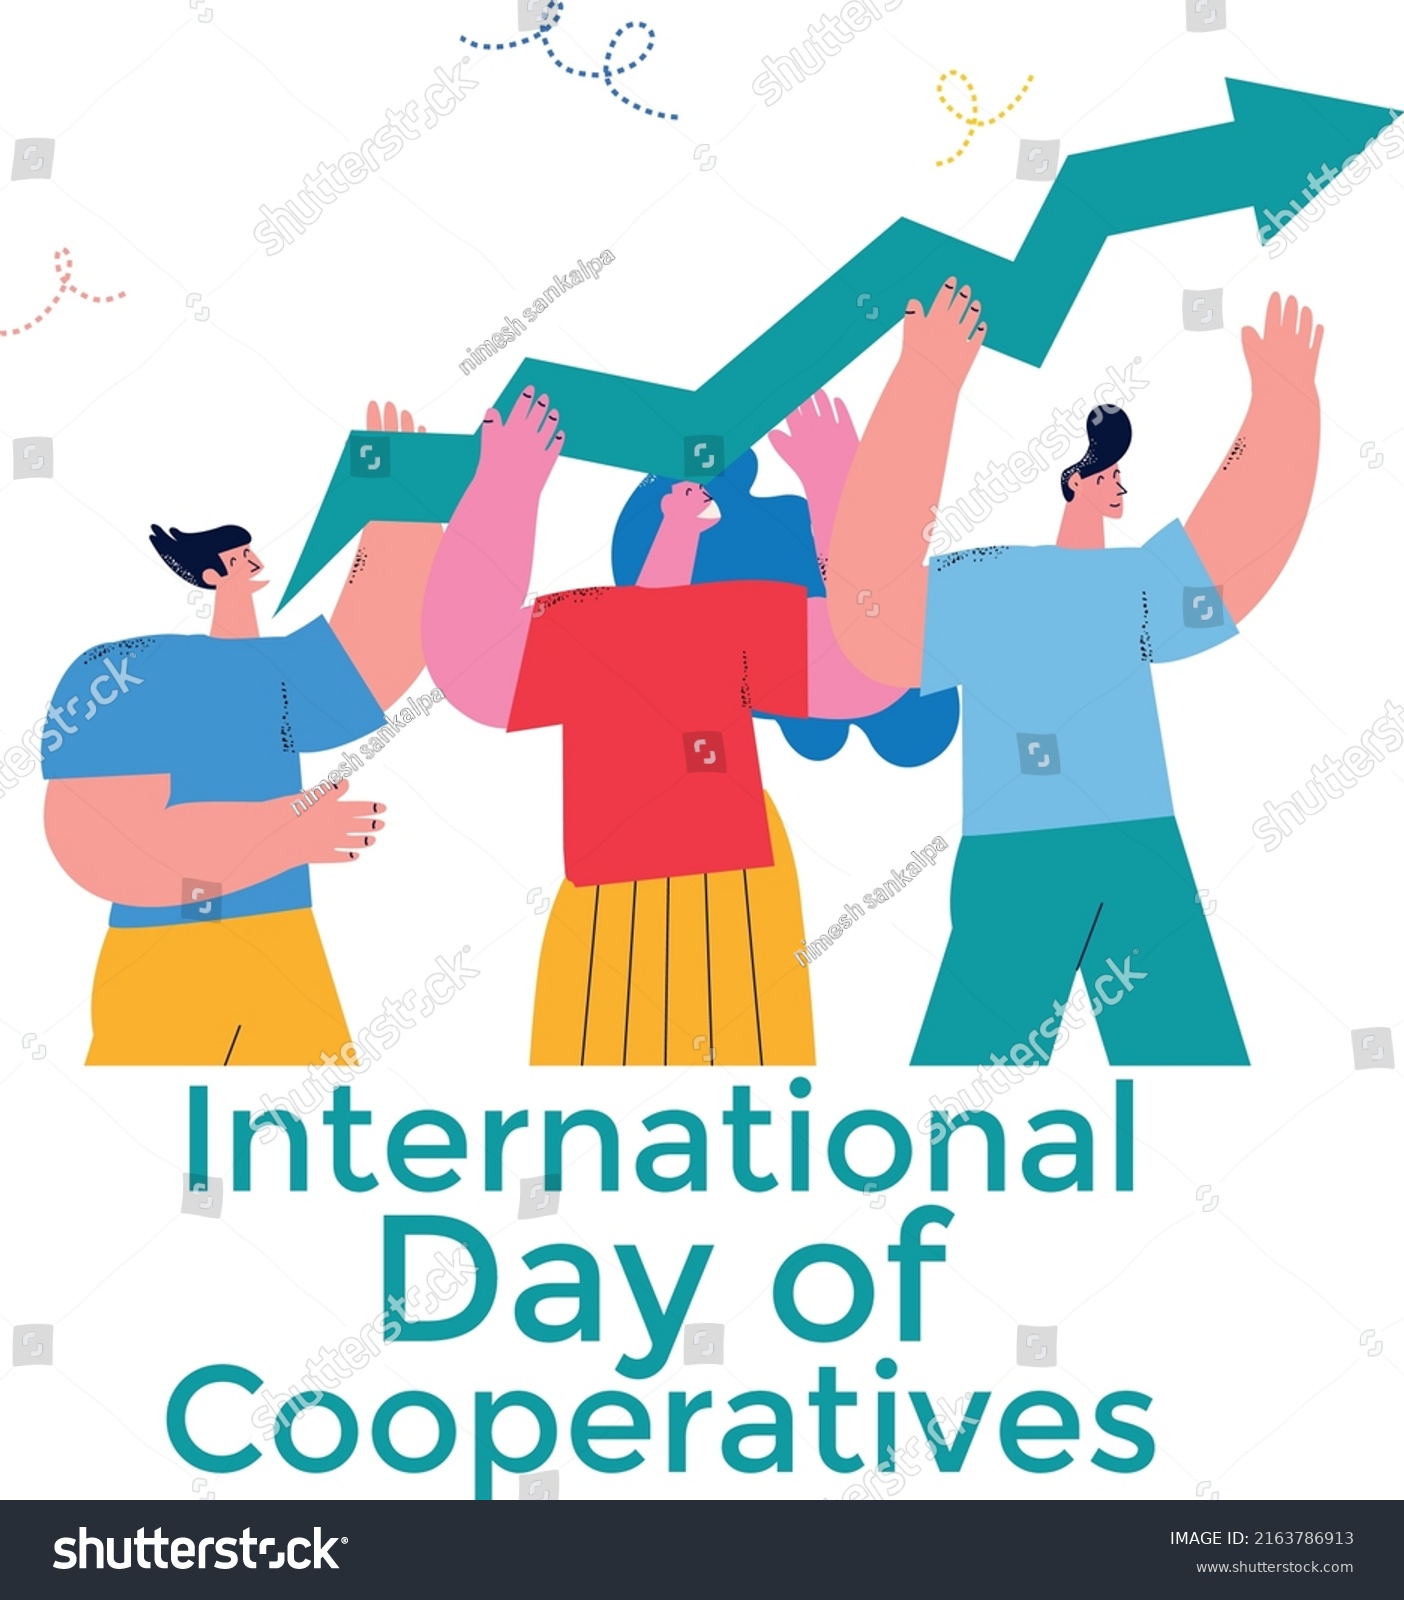 International Day Cooperatives Vector Stock Vector Royalty Free 2163786913 Shutterstock 3812